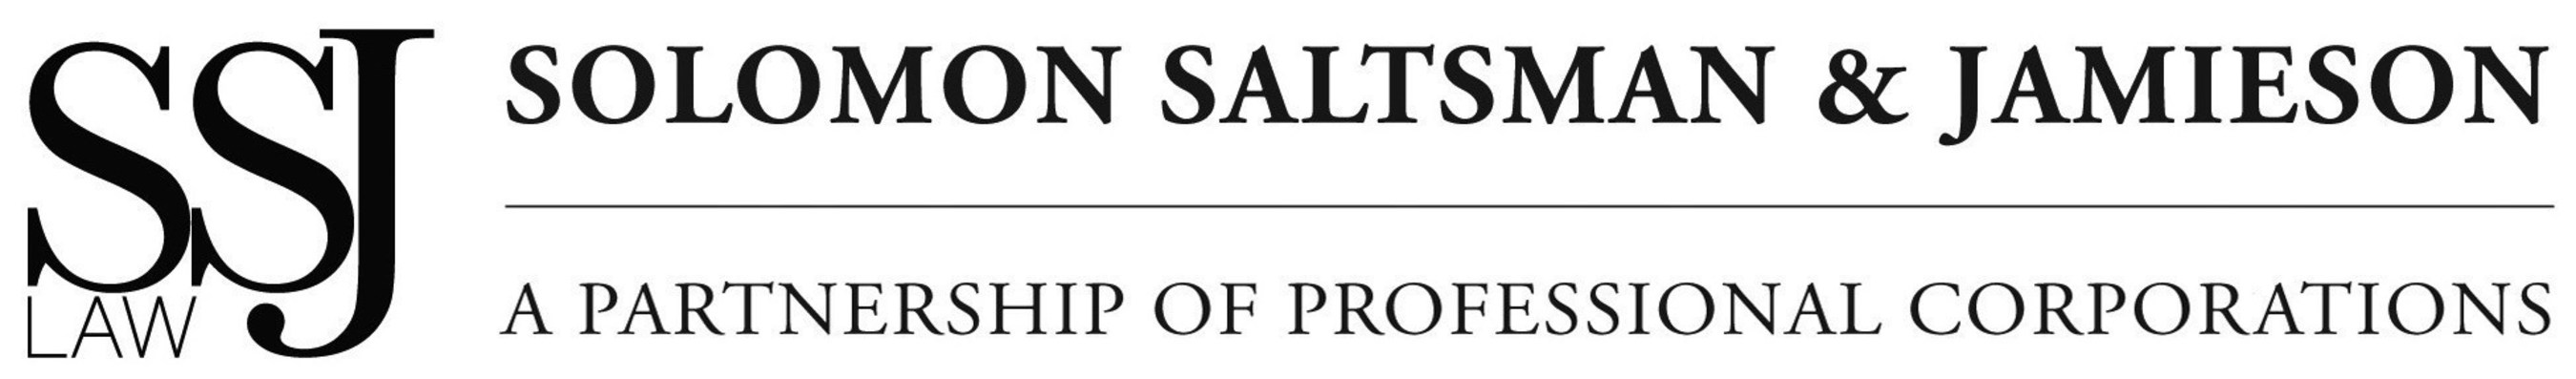 SSJ Law - Solomon Saltsman & Jamieson Logo